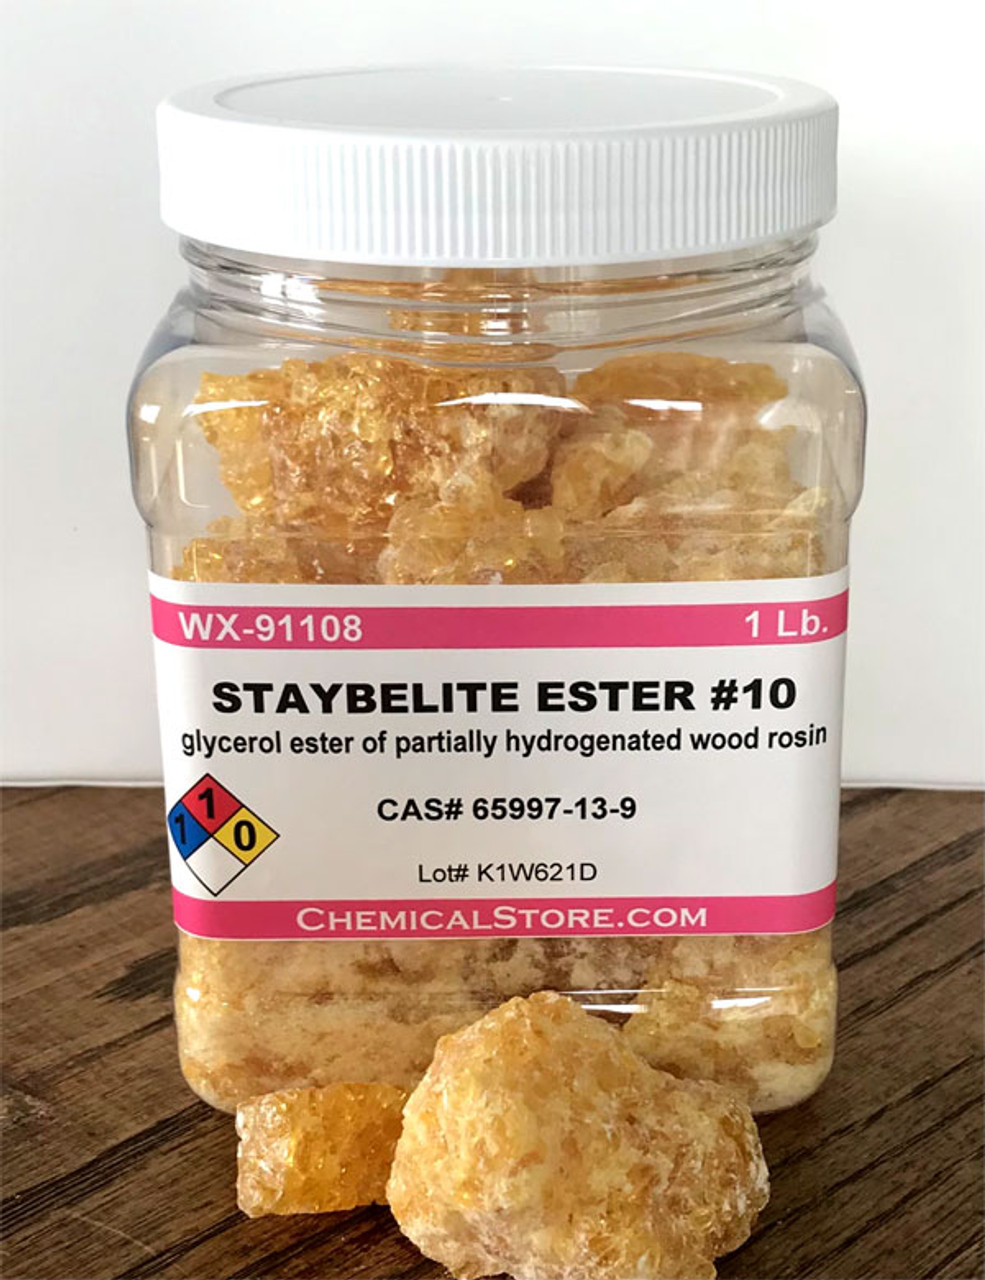 STAYBELITE ESTER #10, Glycerol Ester of Partially Hydrogenated Wood Rosin